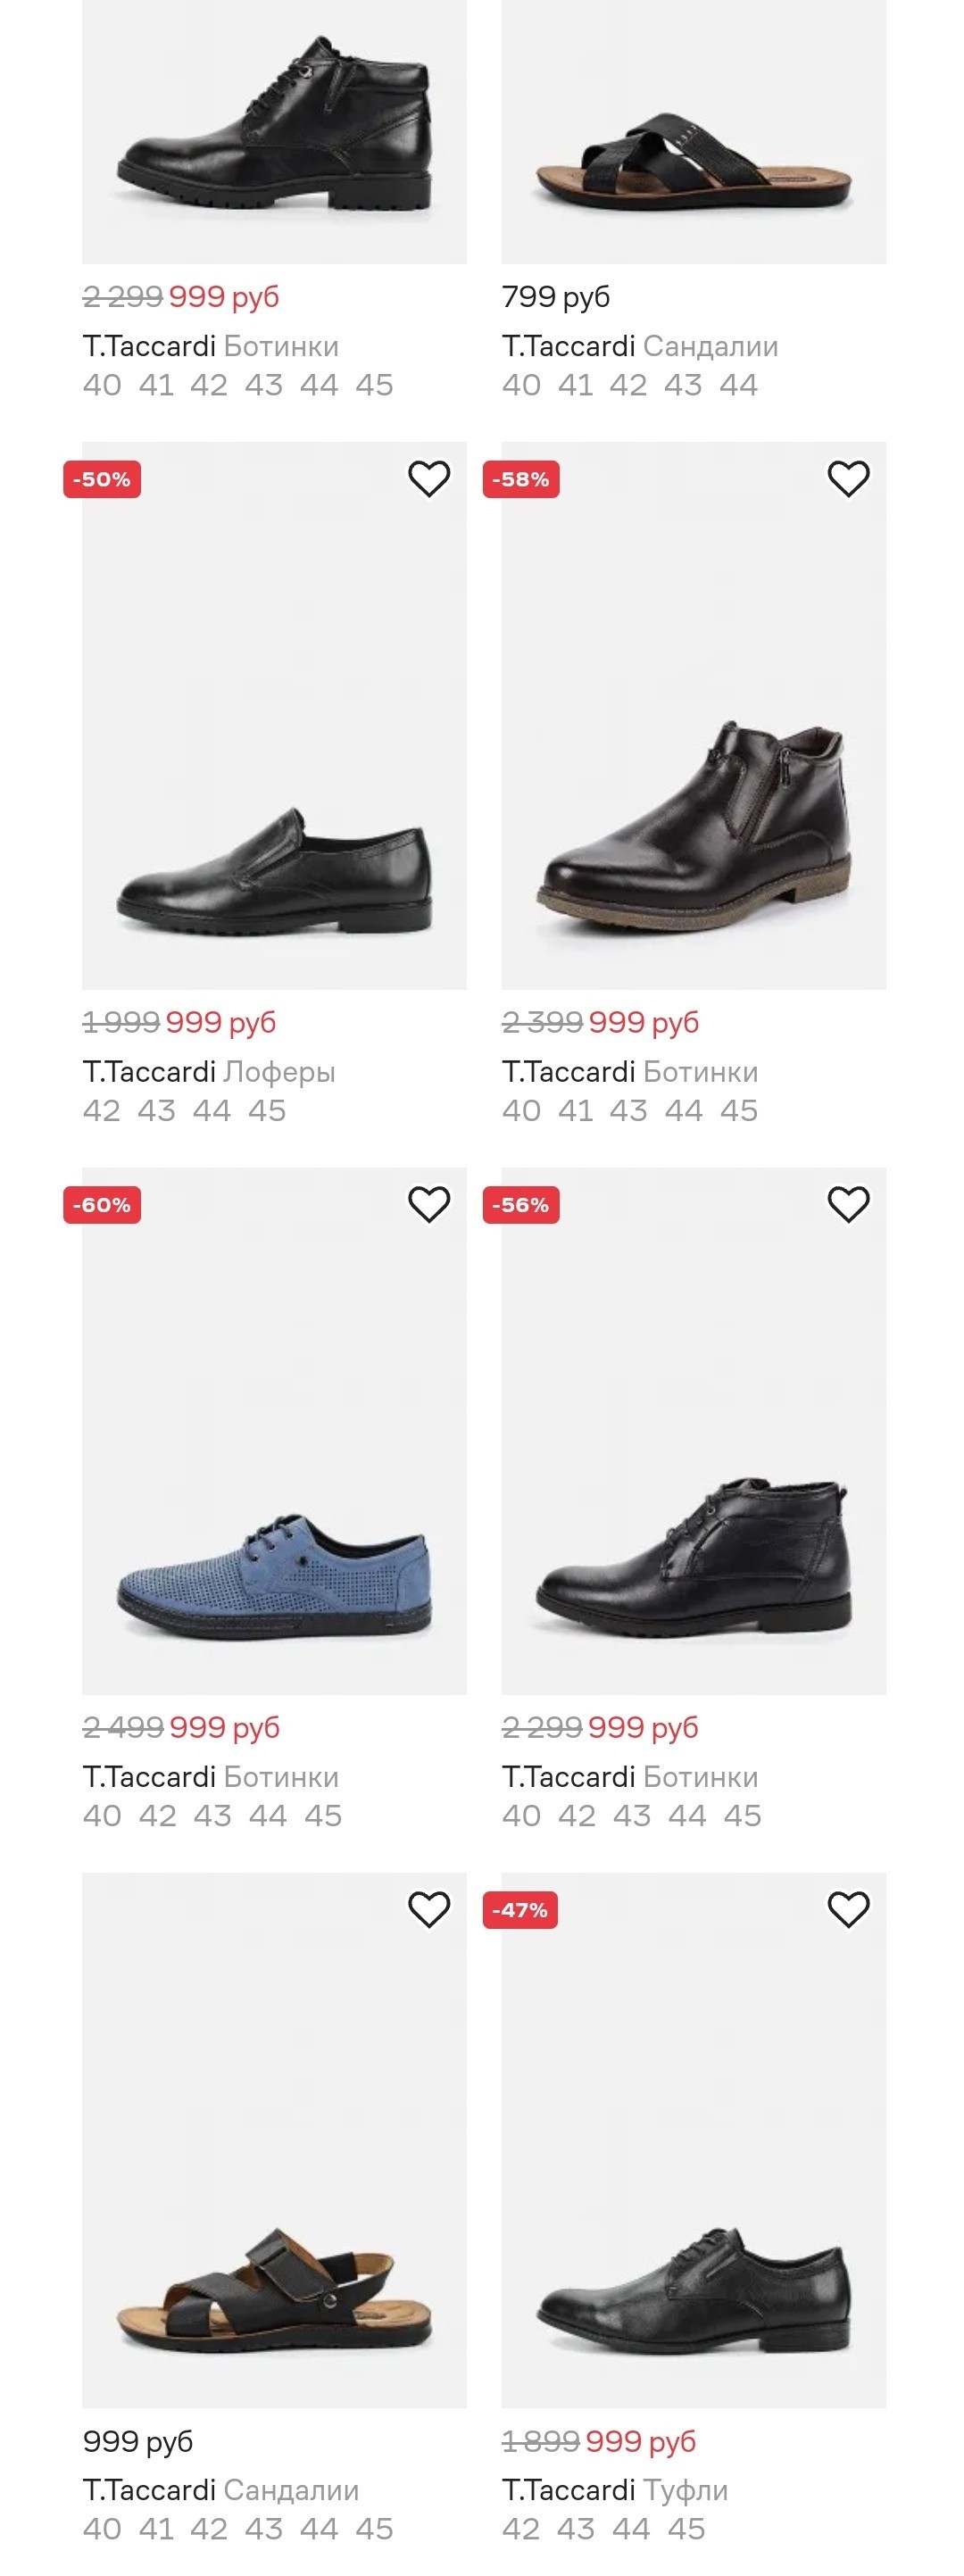 Kari компания каталог. Kari интернет-магазин обуви. Фирма кари обувь чье производство. Чьё производство обуви в кари.